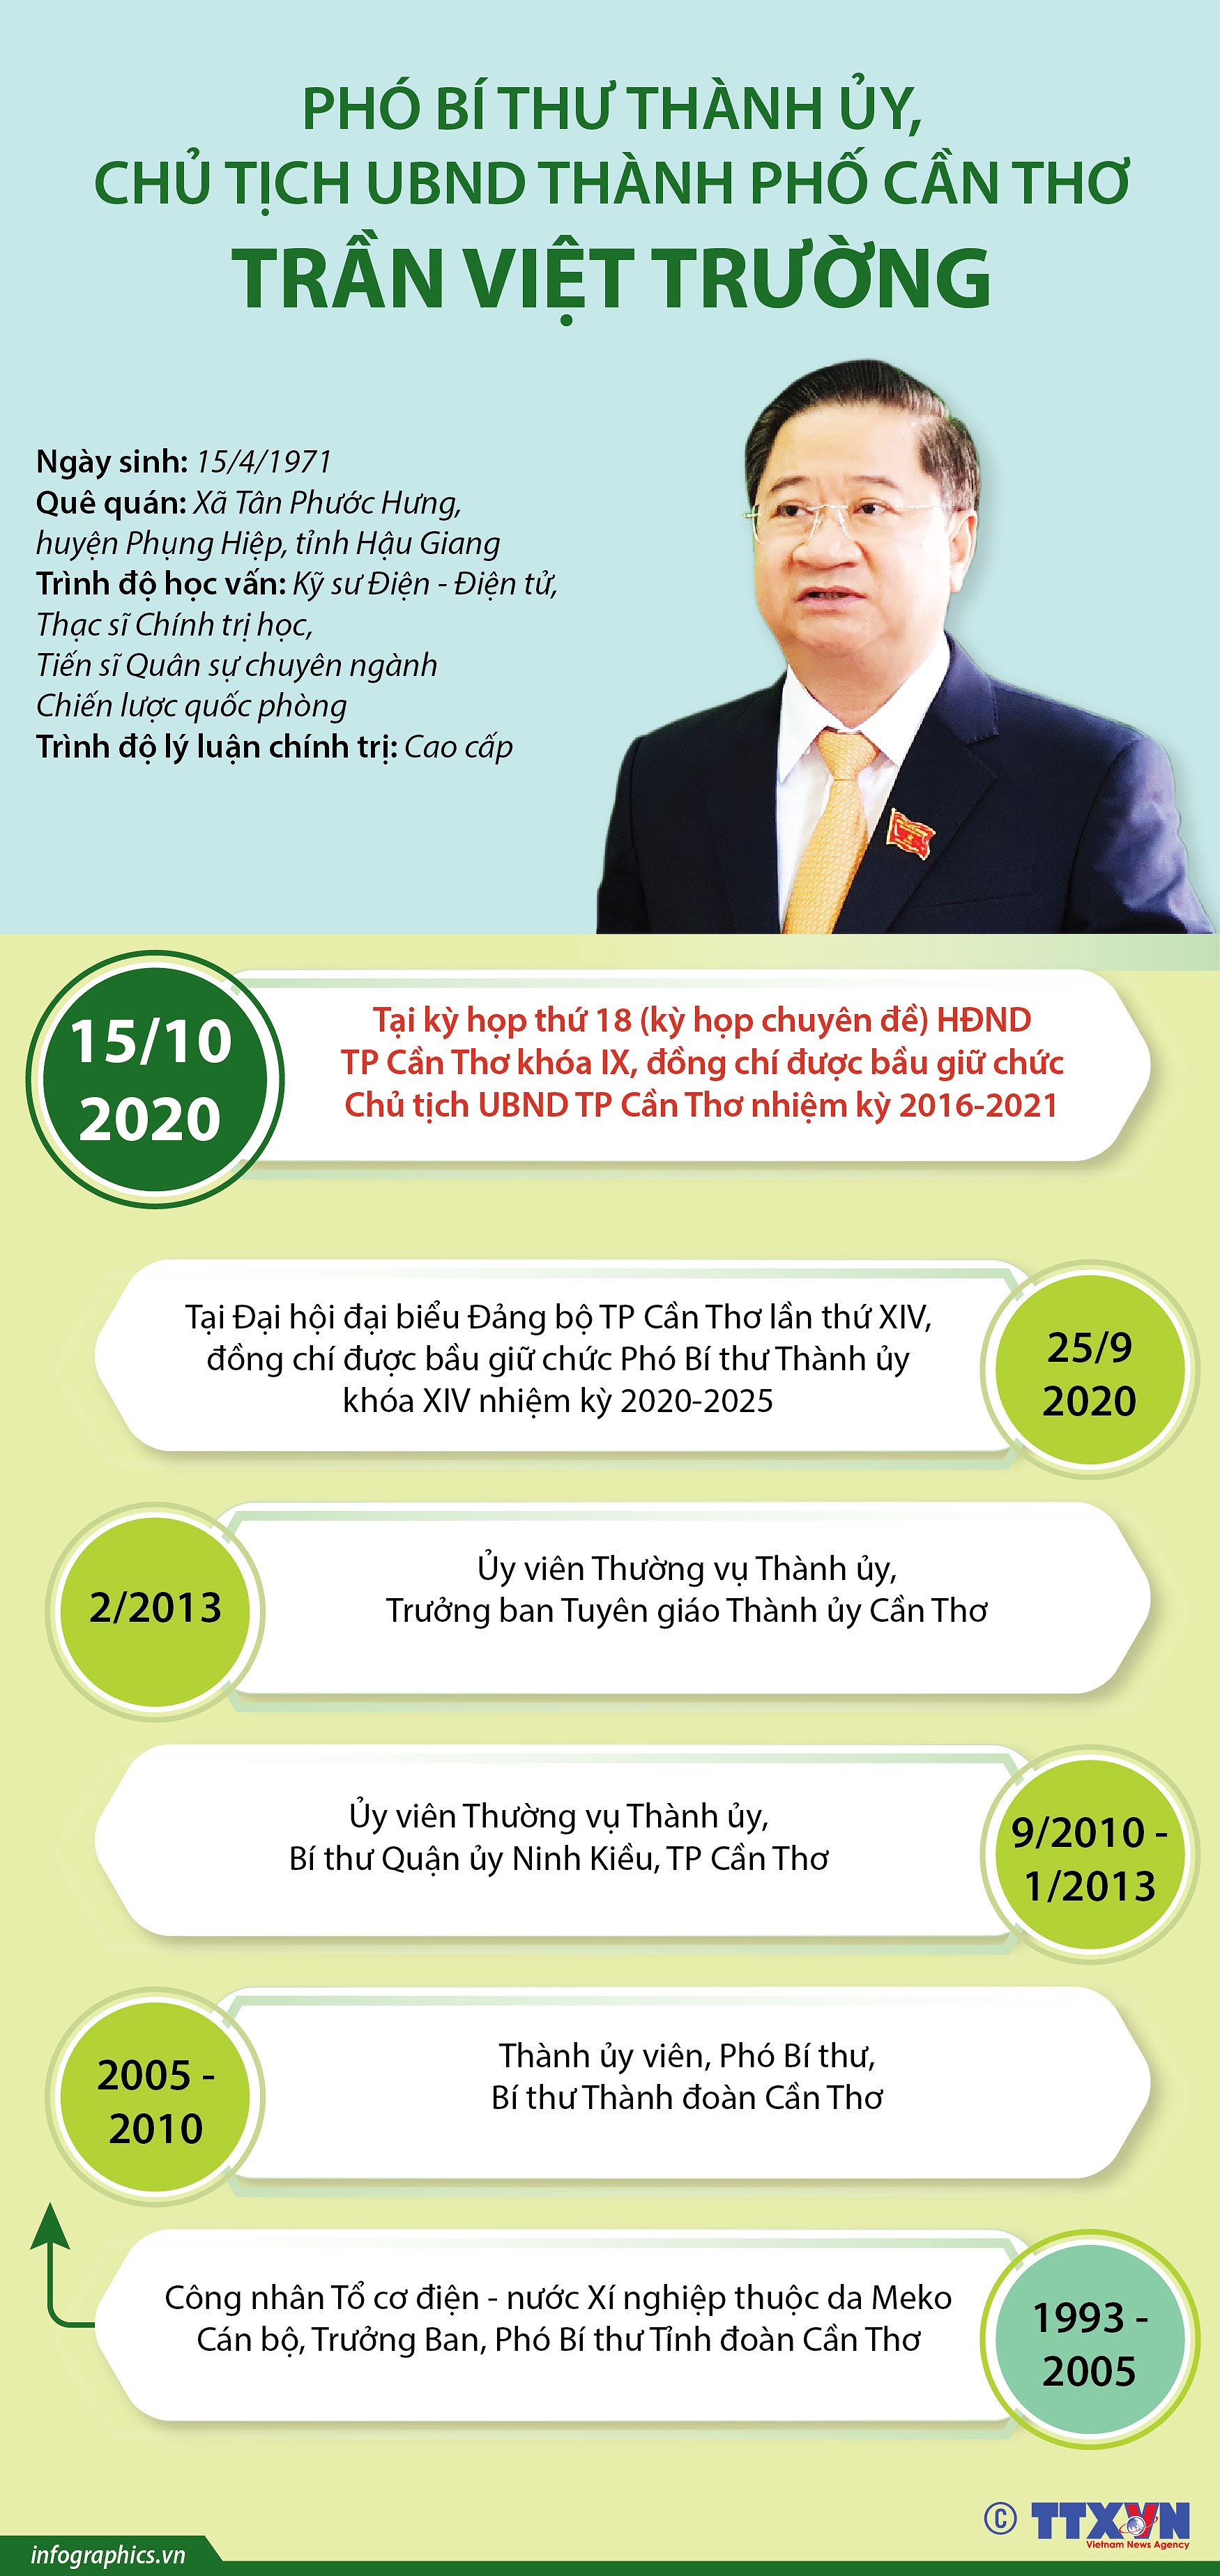 [Infographics] Chu tich UBND thanh pho Can Tho Tran Viet Truong hinh anh 1